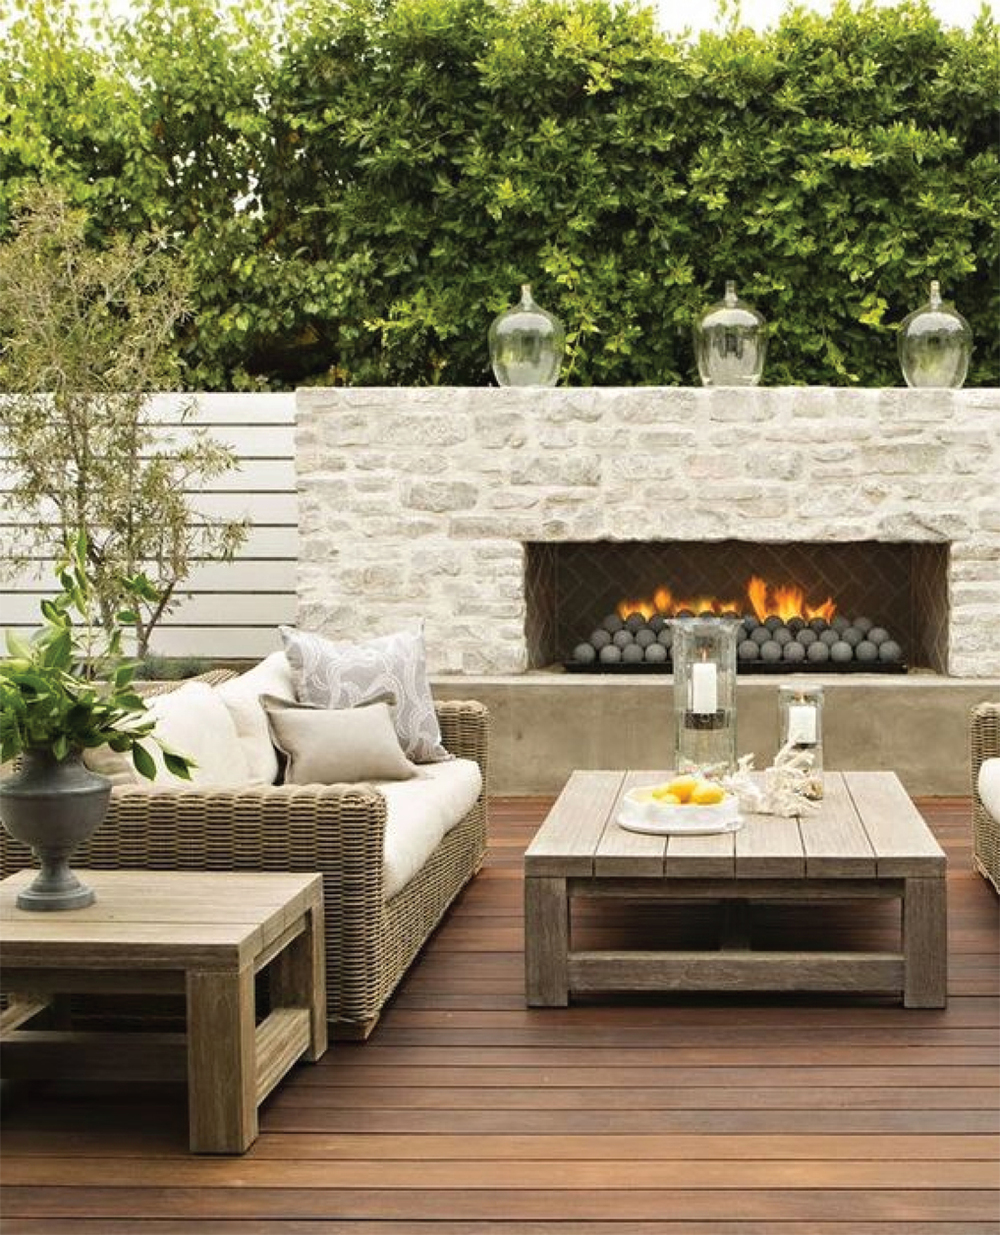 Acucraft Fireplace Inspirational Outdoor Linear Fireplace Charming Fireplace